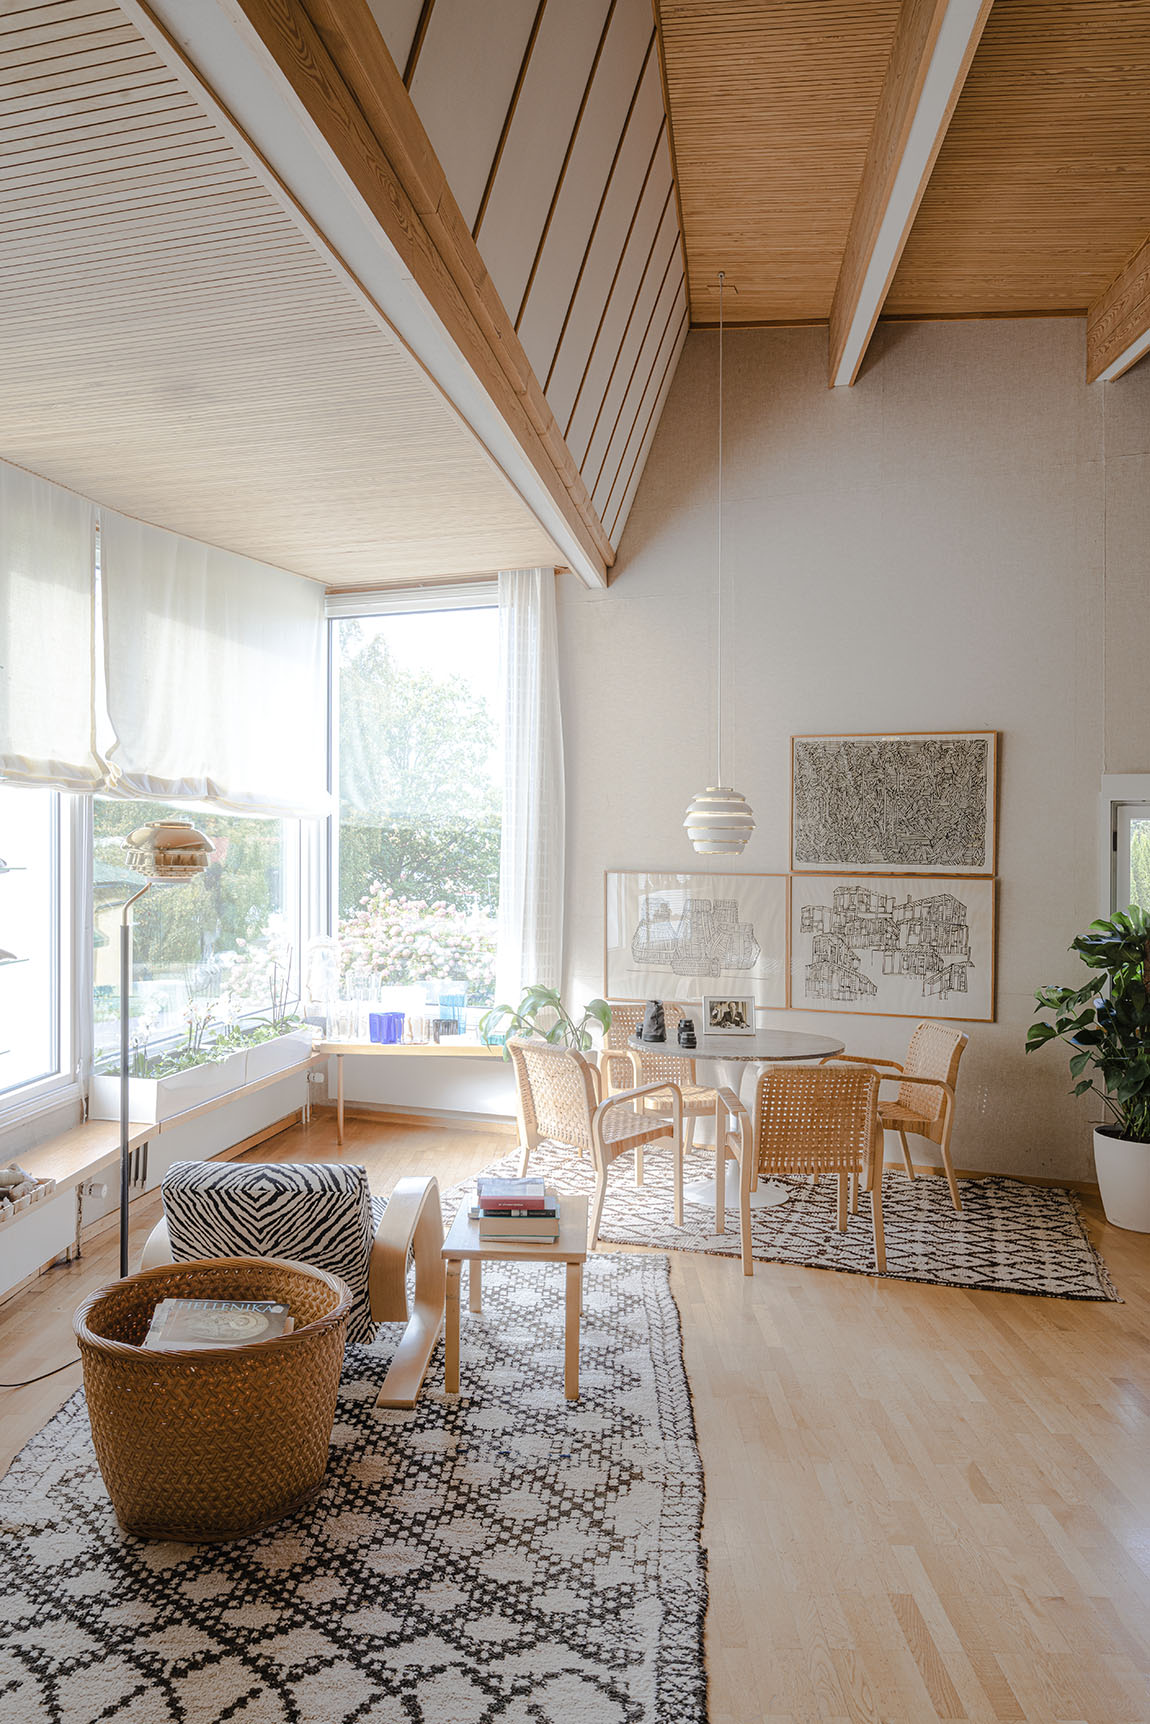 Villa Skeppet: the ‘House of Friendship’ between Göran Schildt and Alvar Aalto